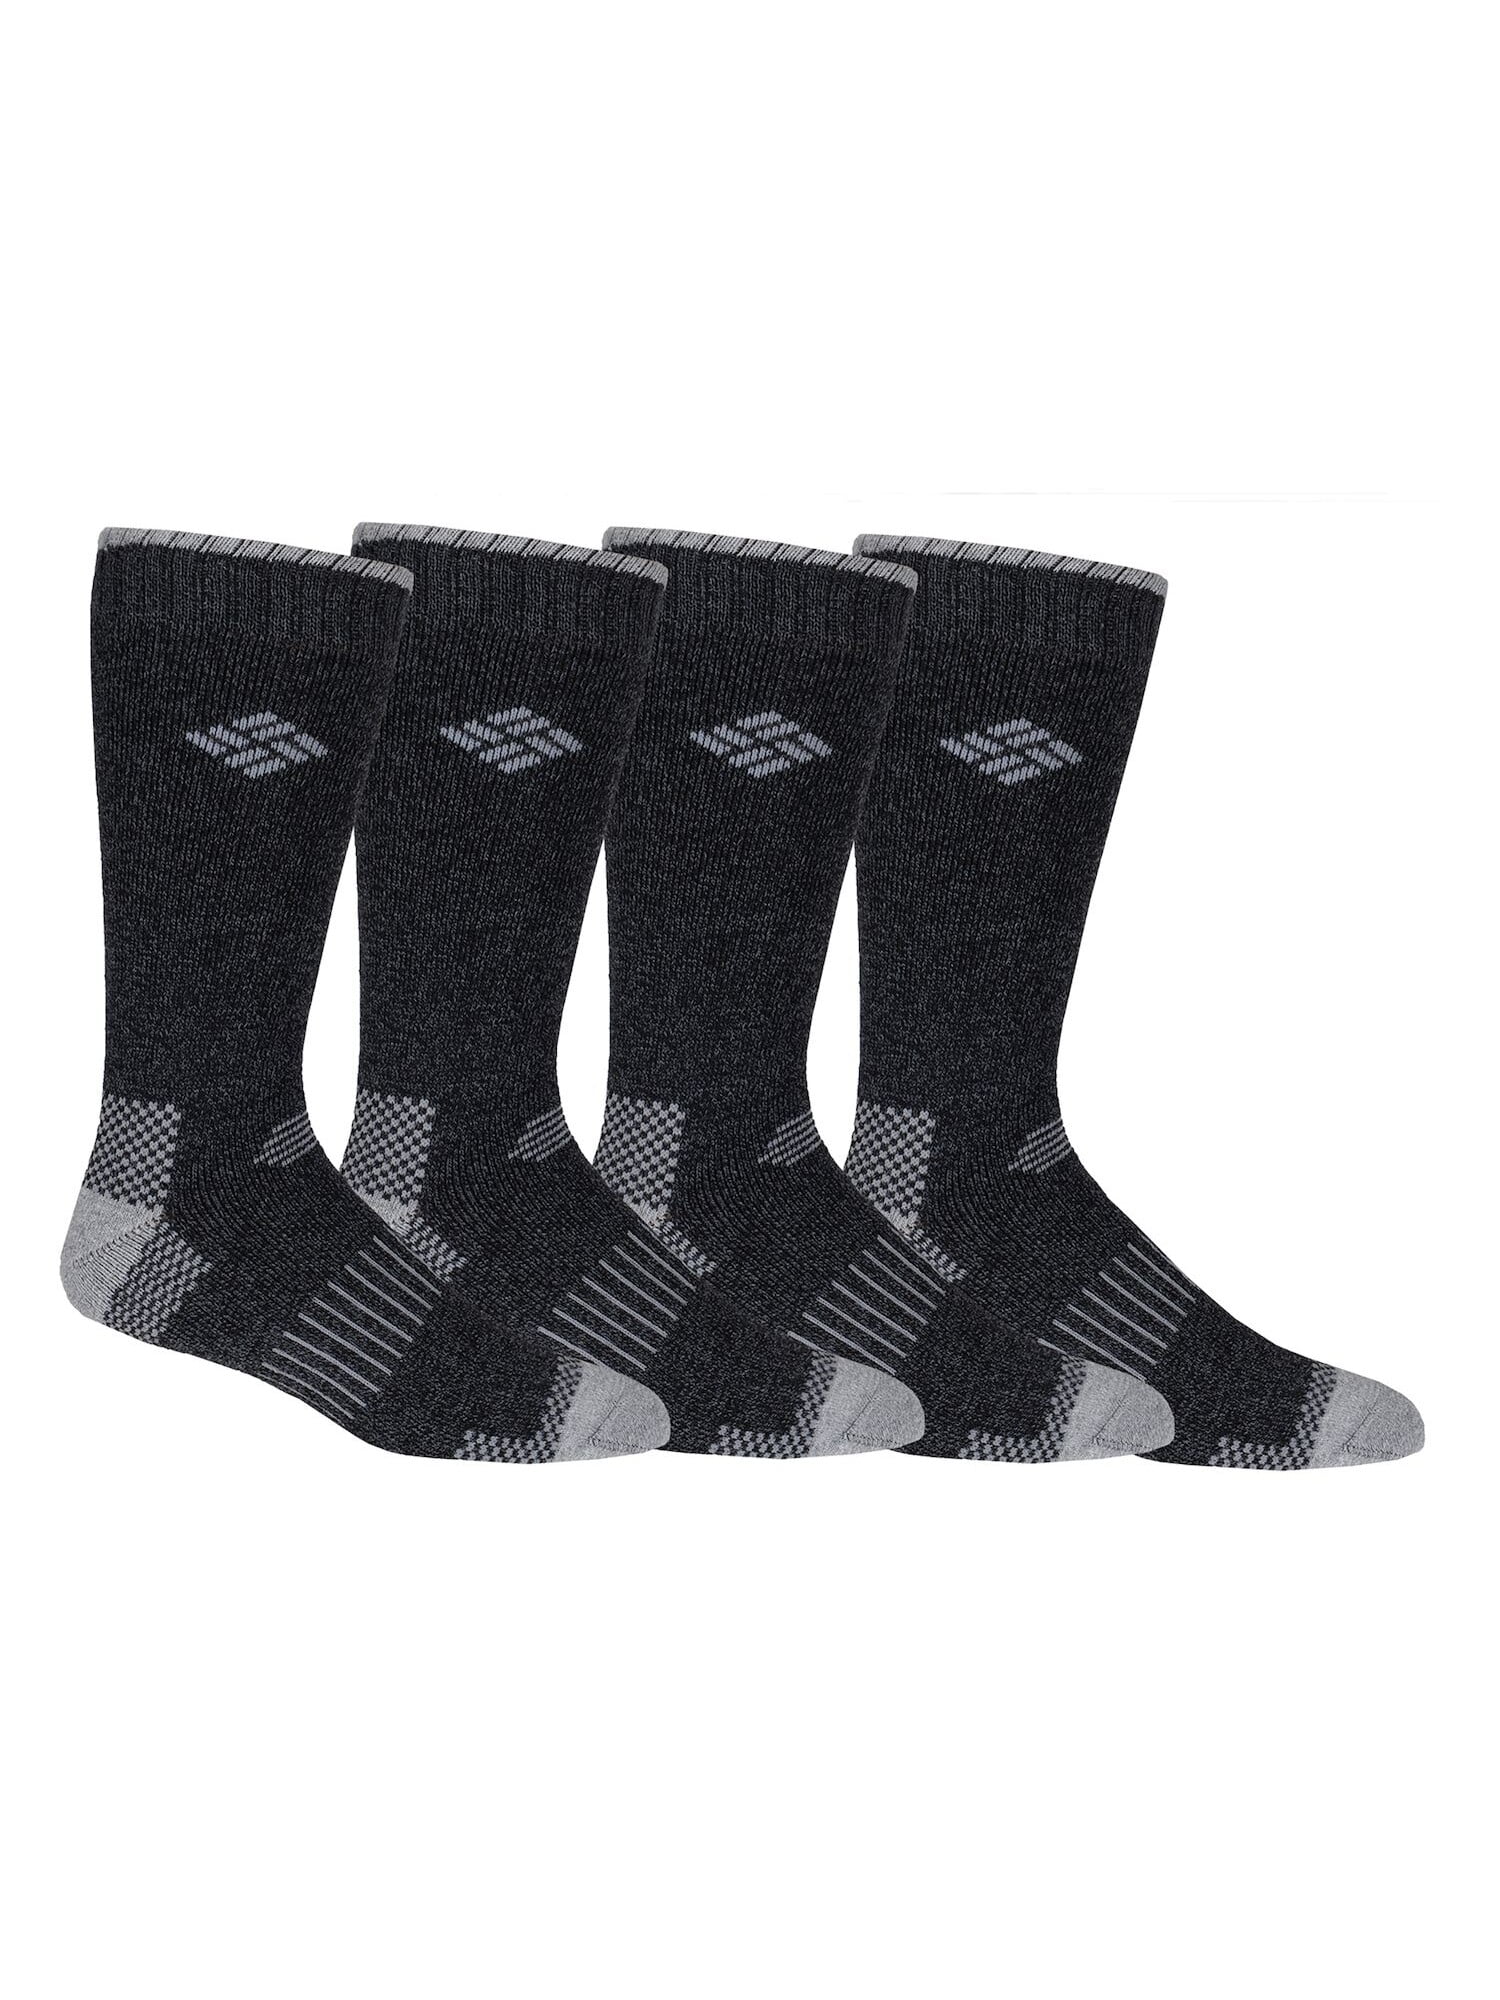 Columbia Men’s Size 6-12 Socks Moisture Control Ribbon 4 Pack Black New 